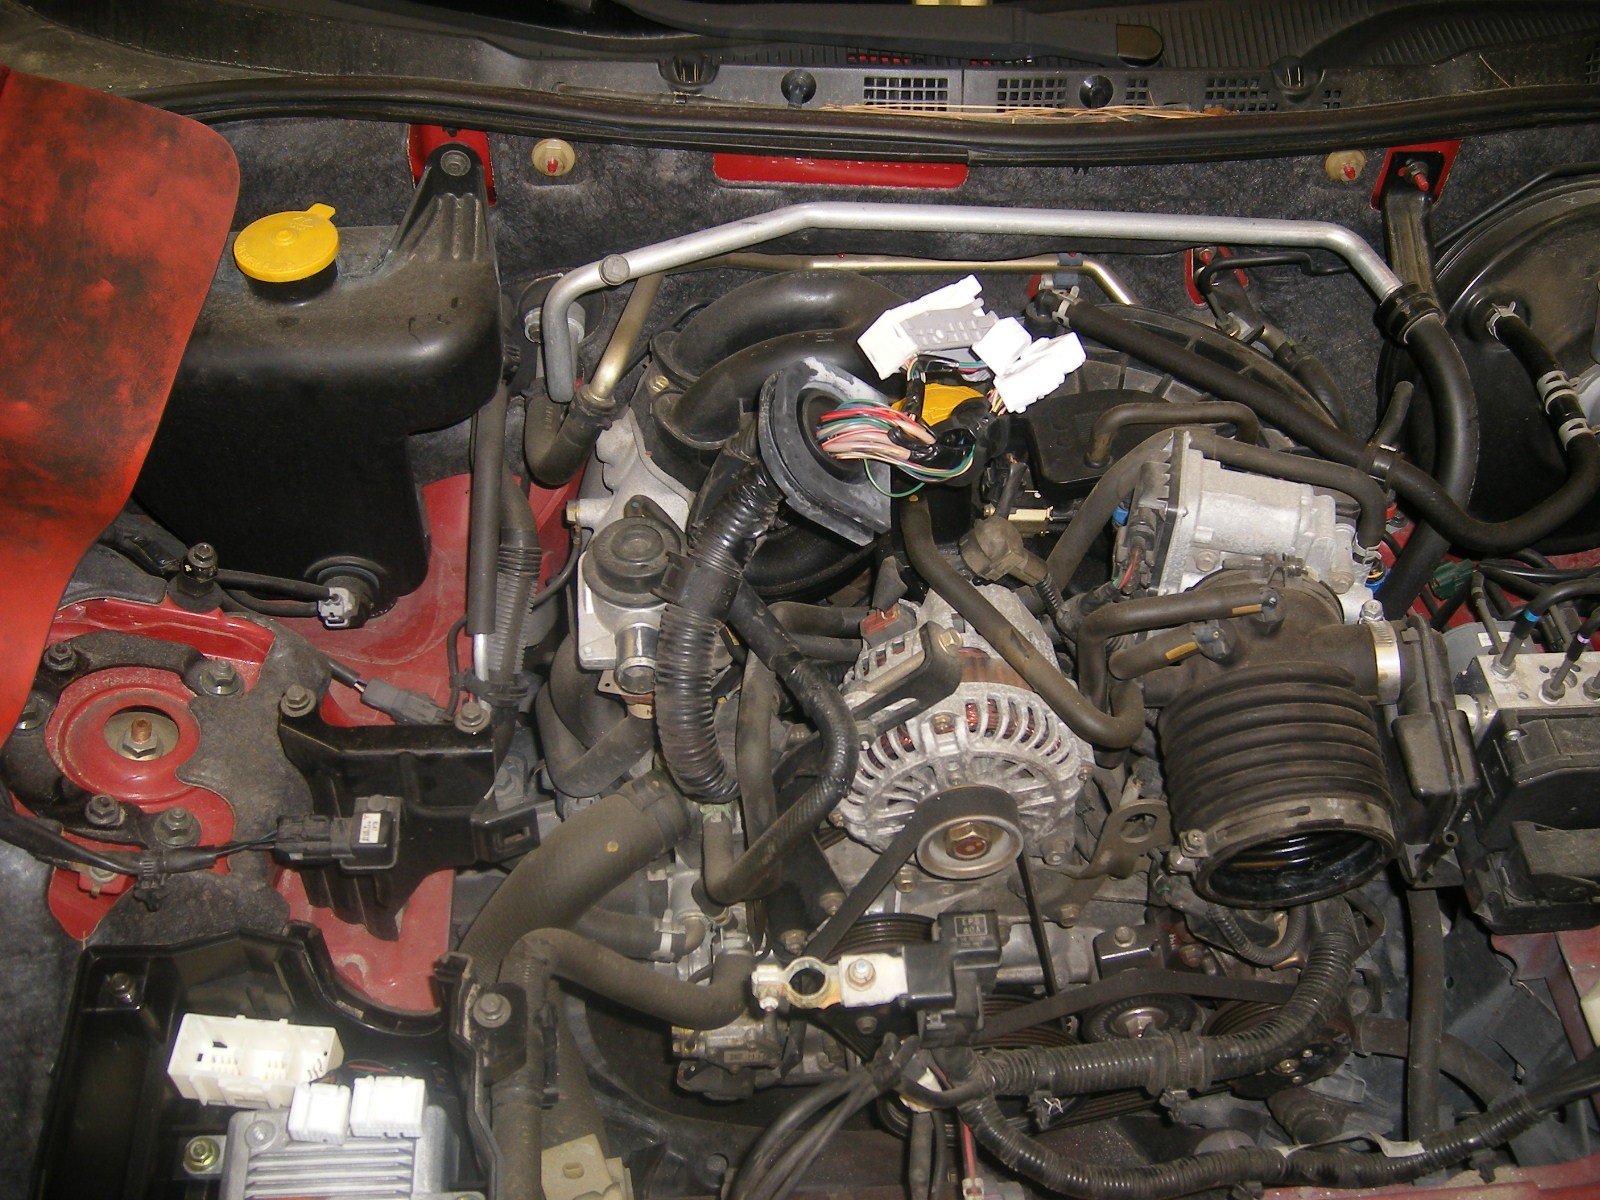 Mazda Rx8 Engine Diagram Diy Rx8 Engine Removal How to W Pics Rx8club Of Mazda Rx8 Engine Diagram